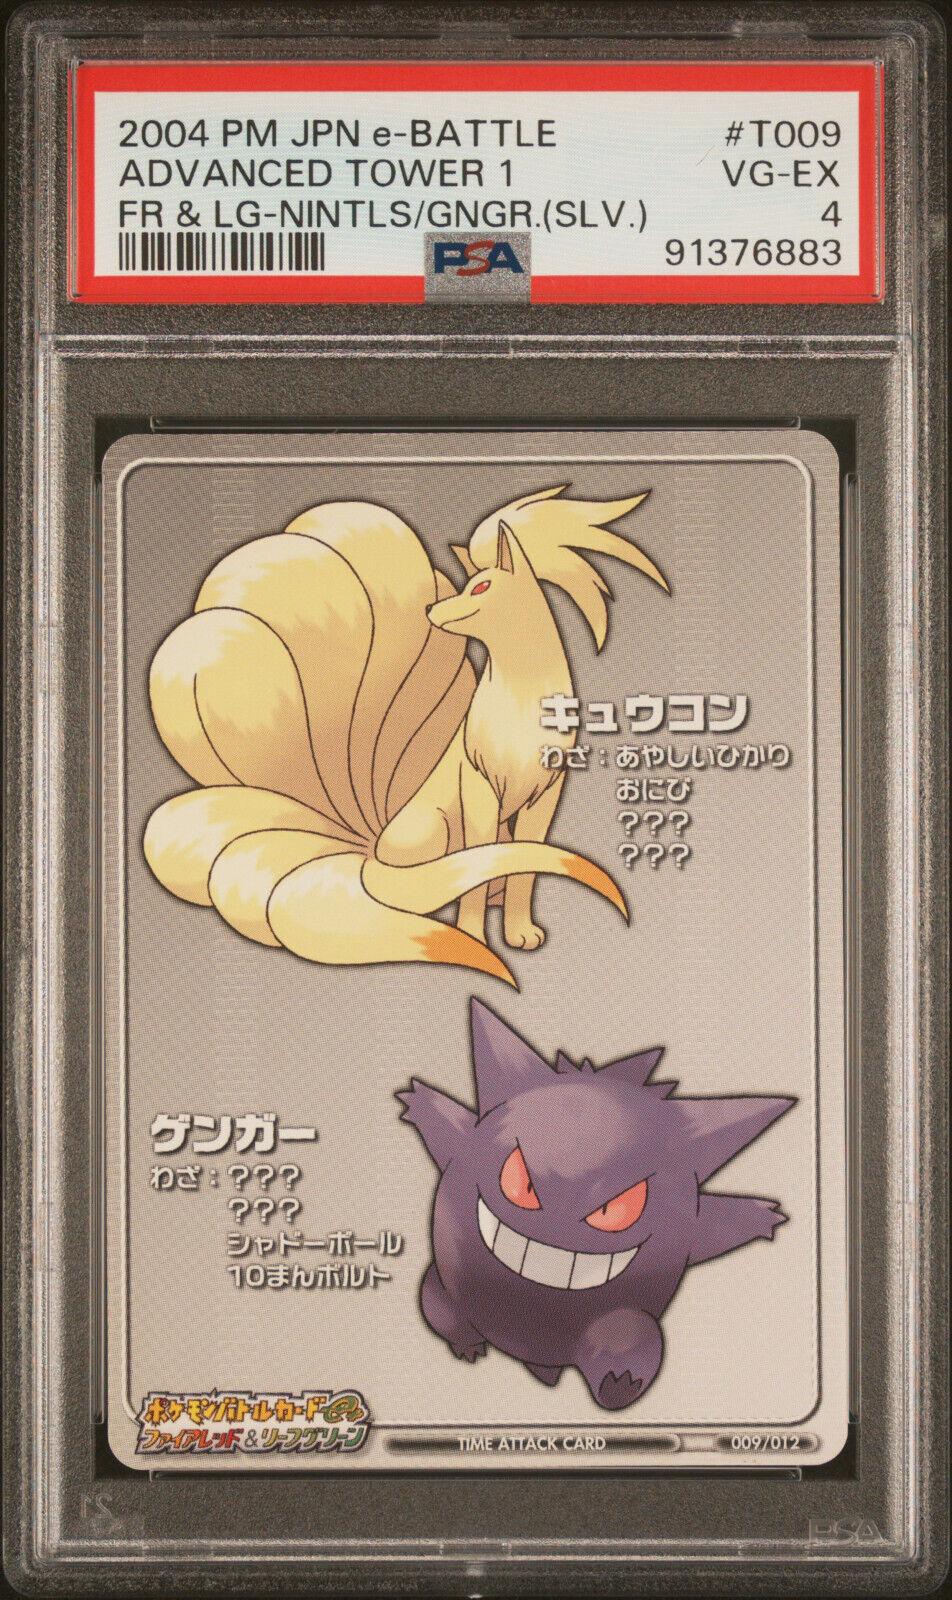 PSA 4 NINTLS/GENGAR.2004 (SLV) Advanced Tower 1 JPN e-Battle Pokemon Card #T009